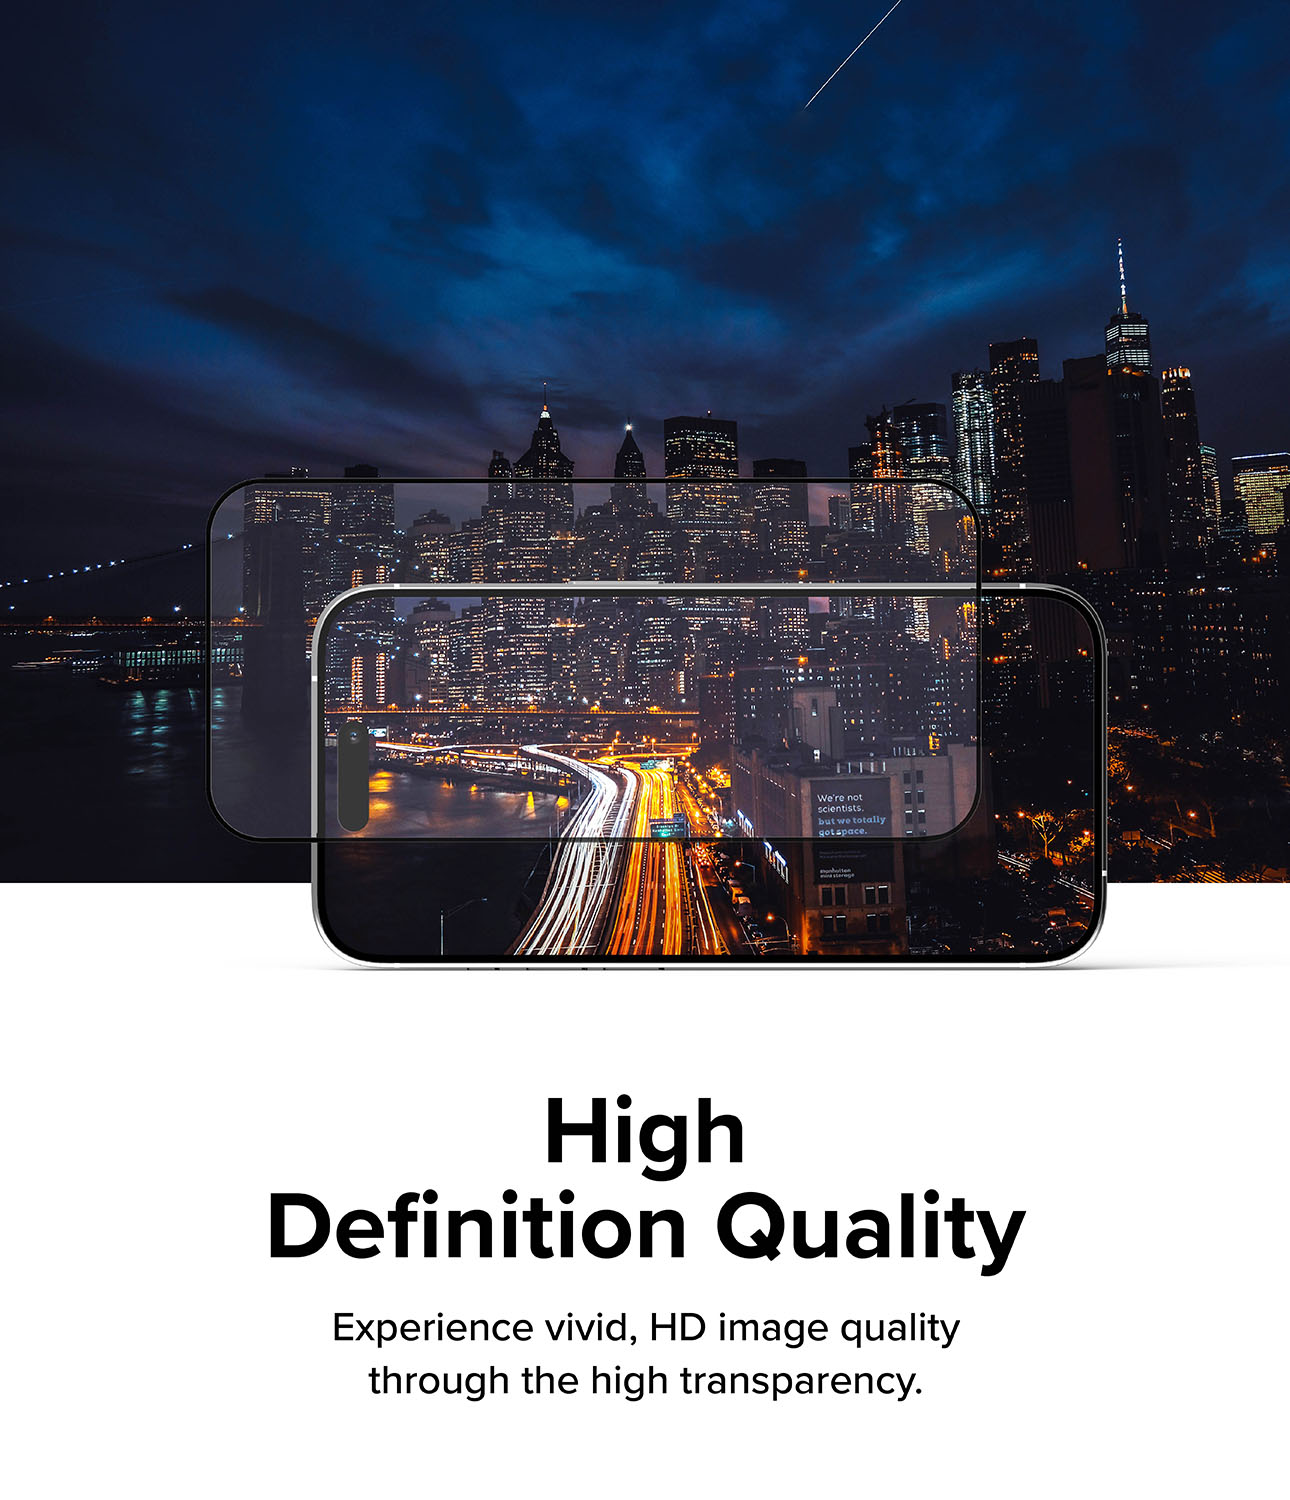 Easy Slide Glass (2 Stück) iPhone 15 Pro Max